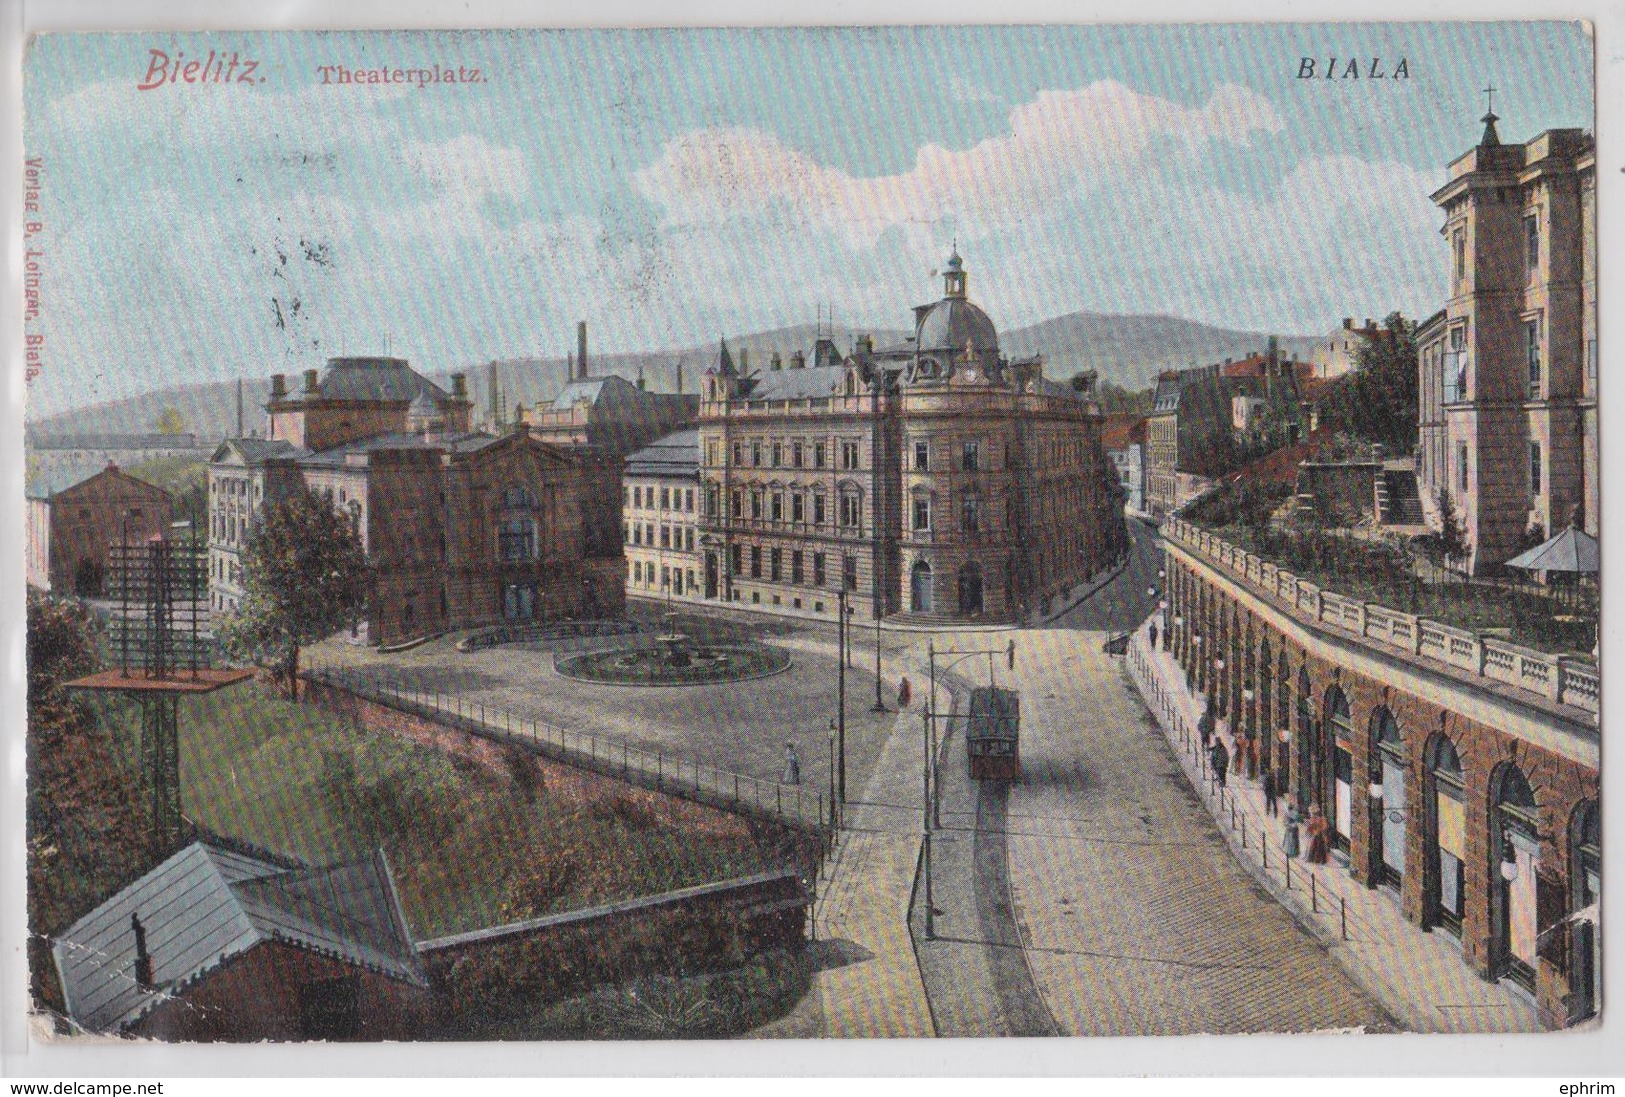 BIELITZ - BIALA - Theaterplatz - Affranchissement Timbre Empire Austro-hongrois - Pologne